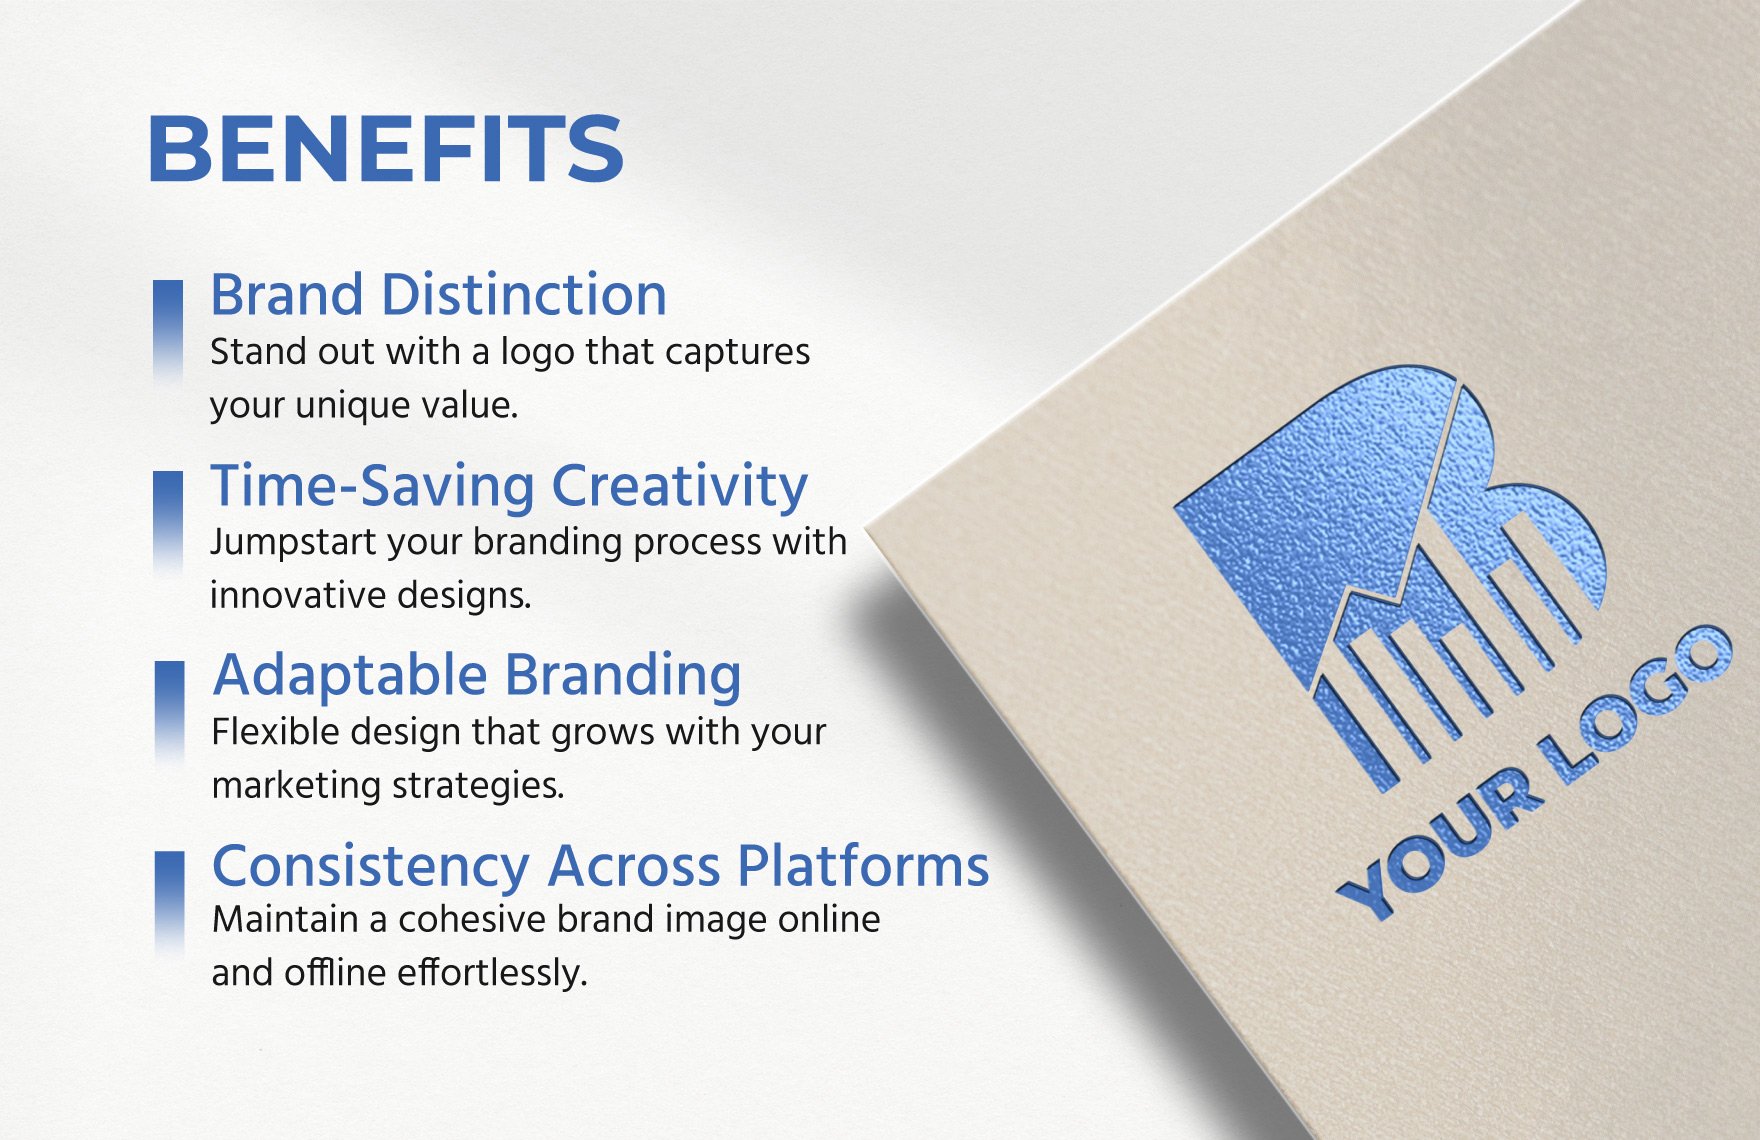 Branding and Identity Marketing Logo Template